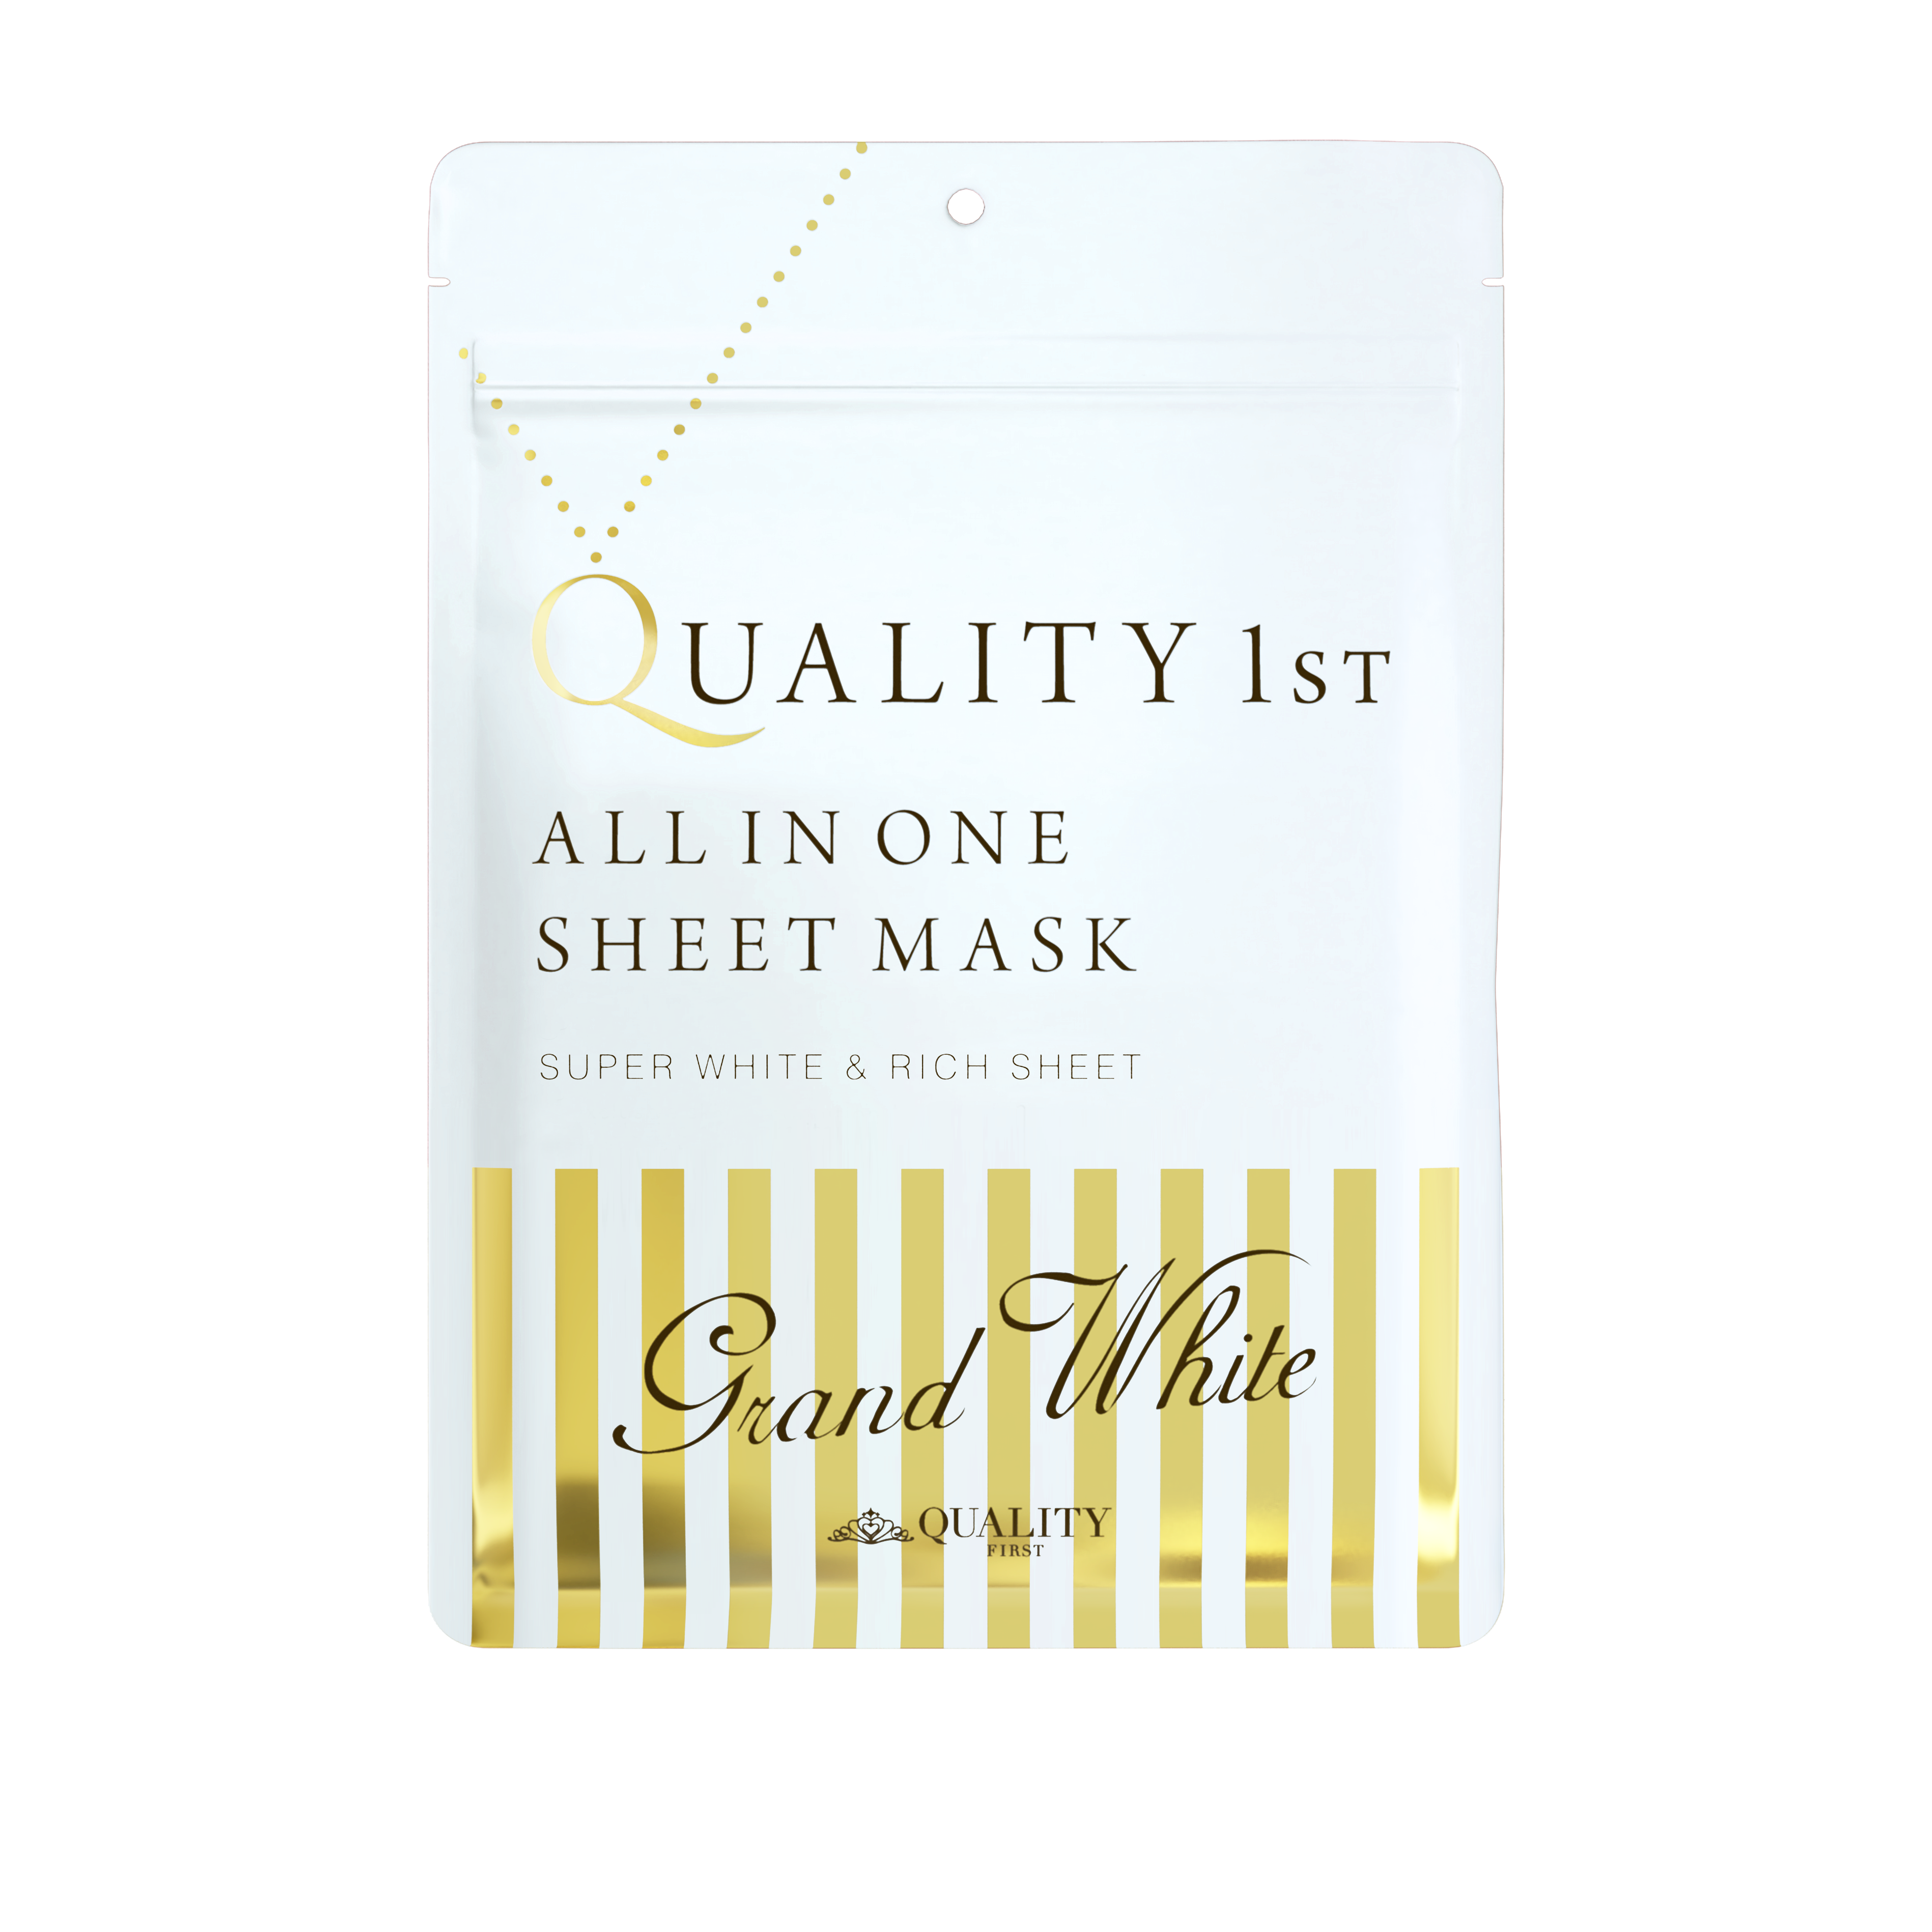 Quality 1st All in one sheet mask Grand White Антивозрастная маска выравнивающая цвет кожи лица,7 шт